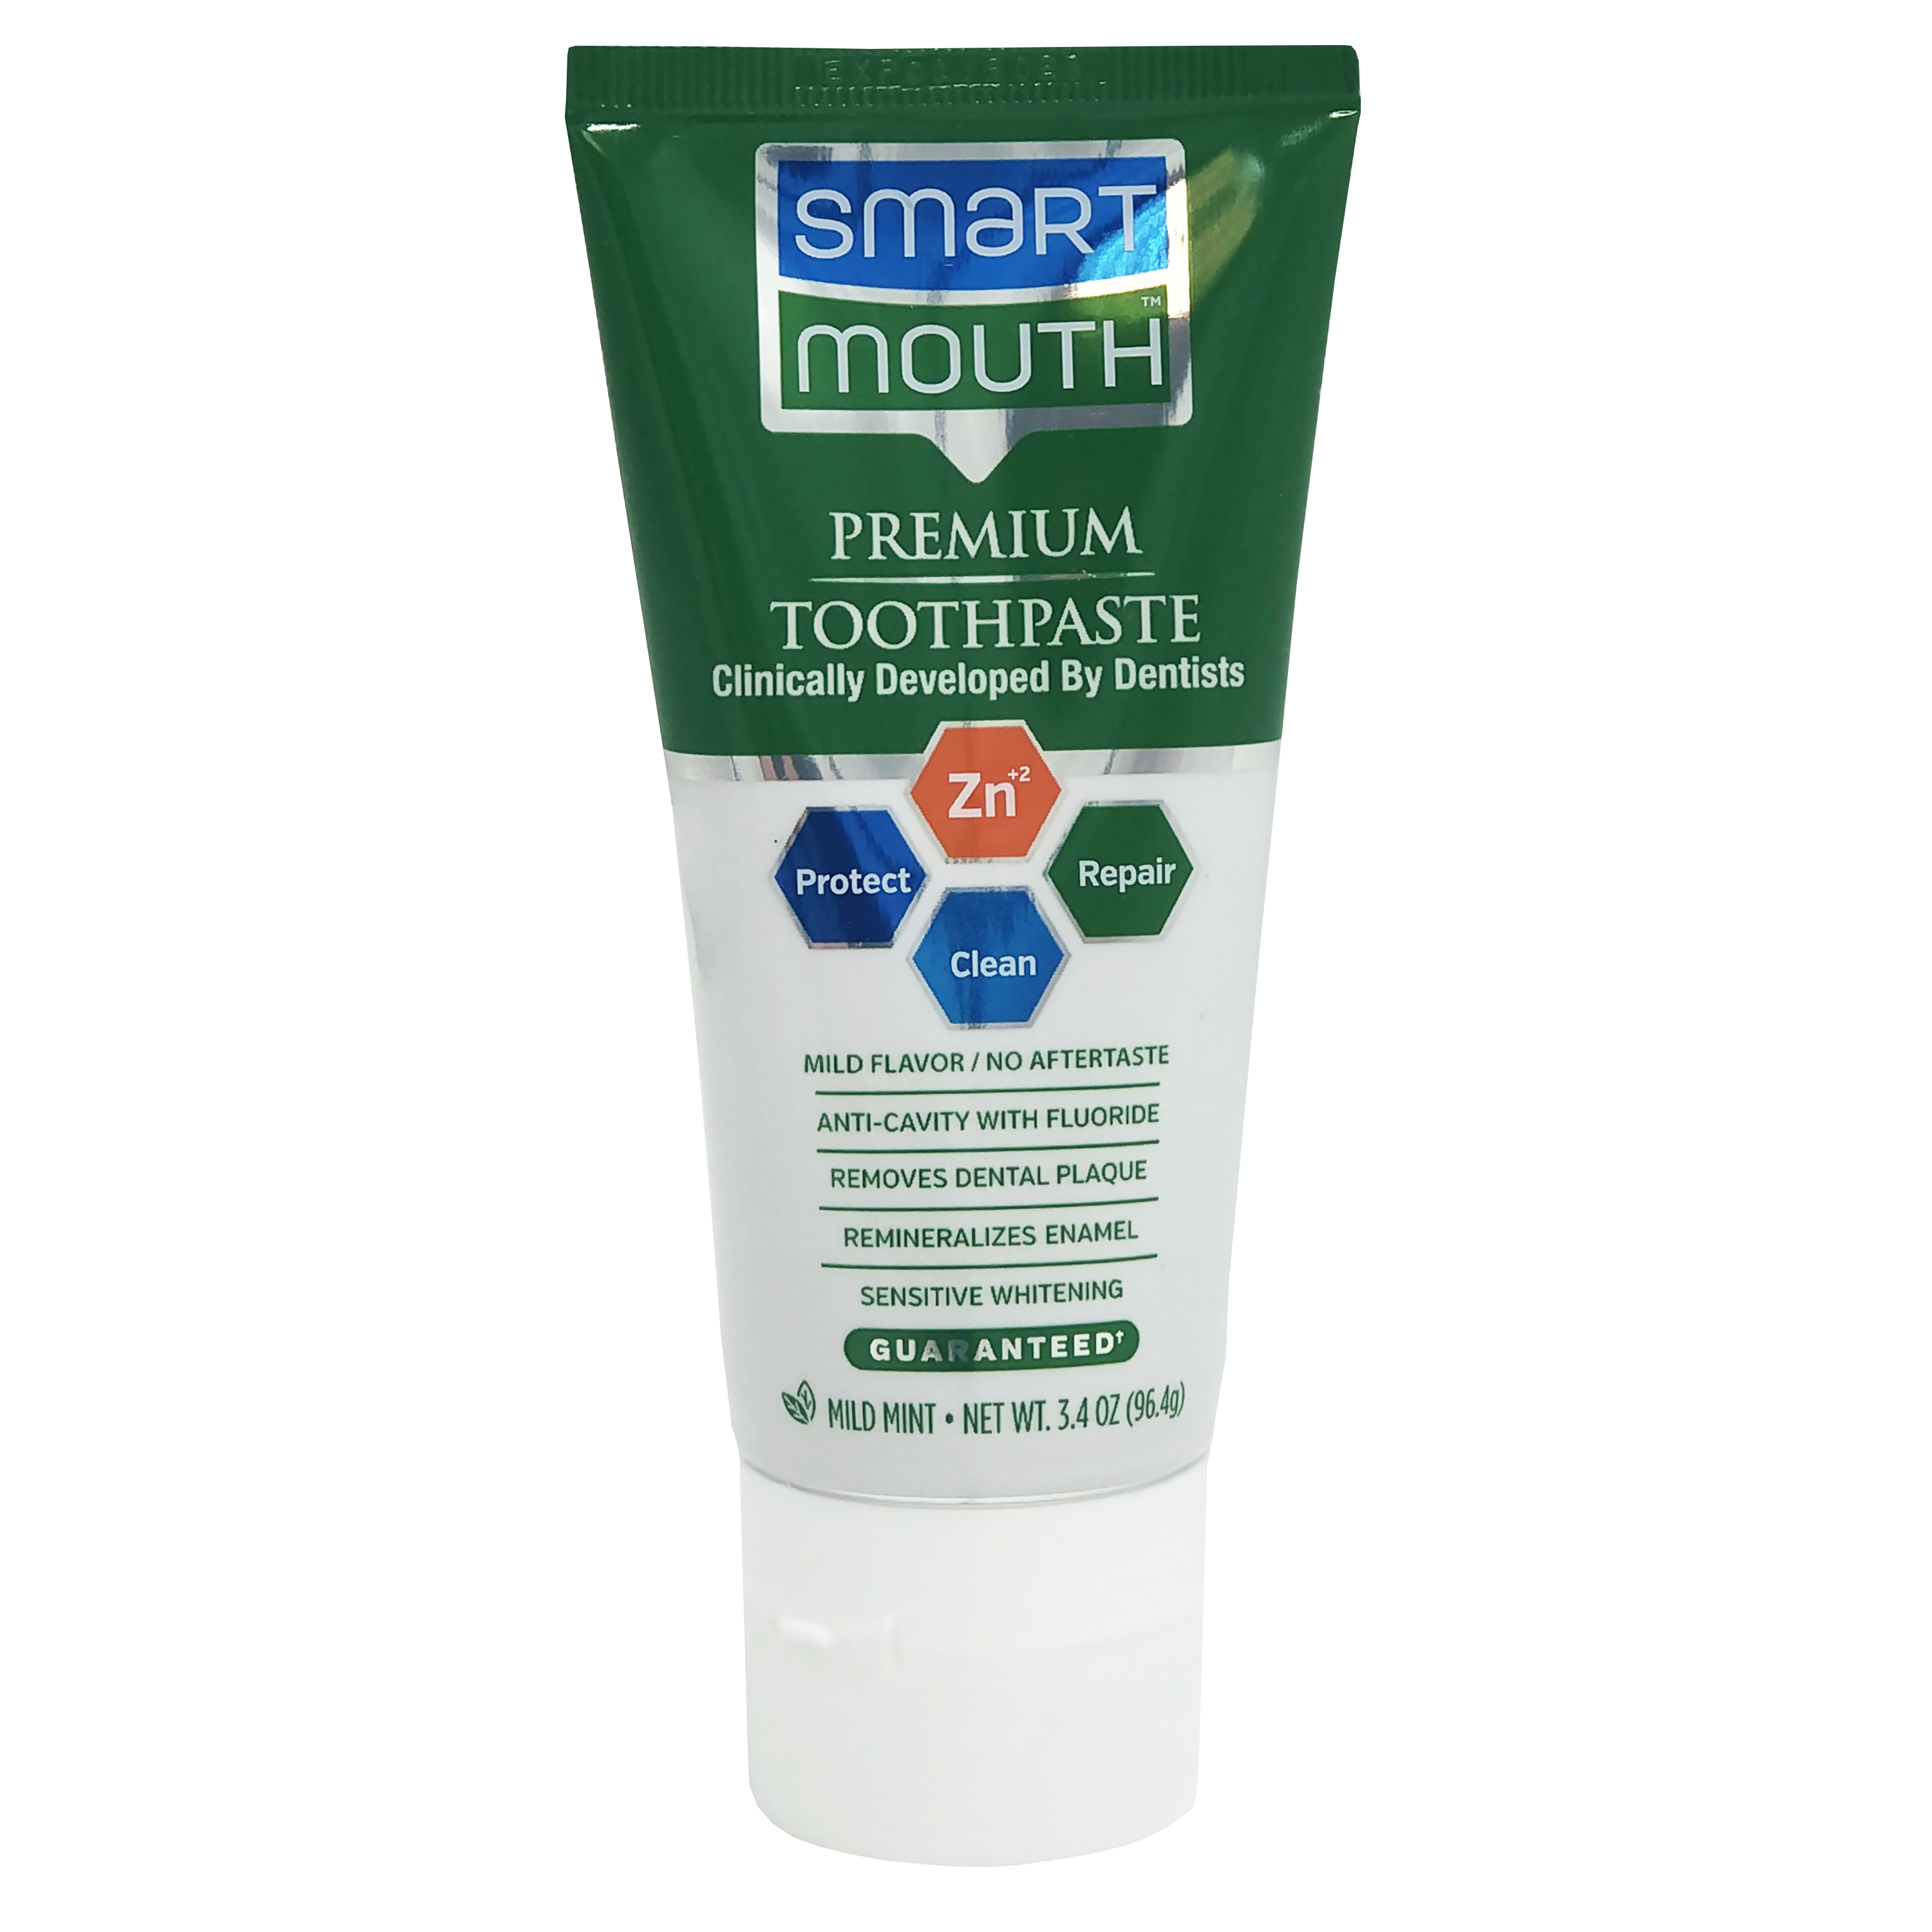 SmartMouth Premium Zinc Ion Toothpaste Protect, Clean & Repair, Mild Mint, 3.4oz - image 1 of 9